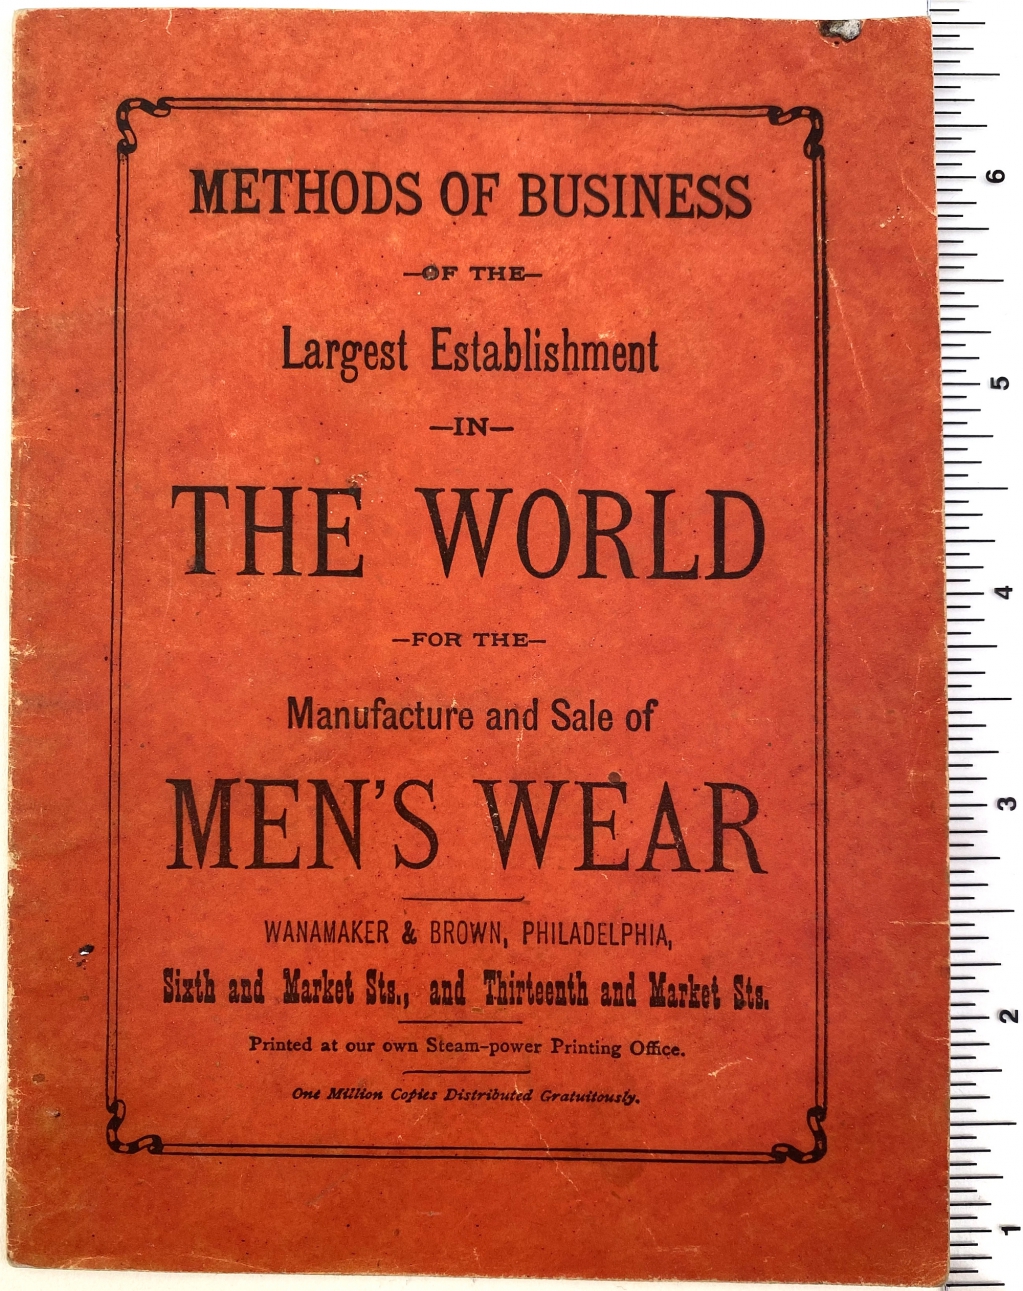 Wanamaker's brochure on Methods of Business